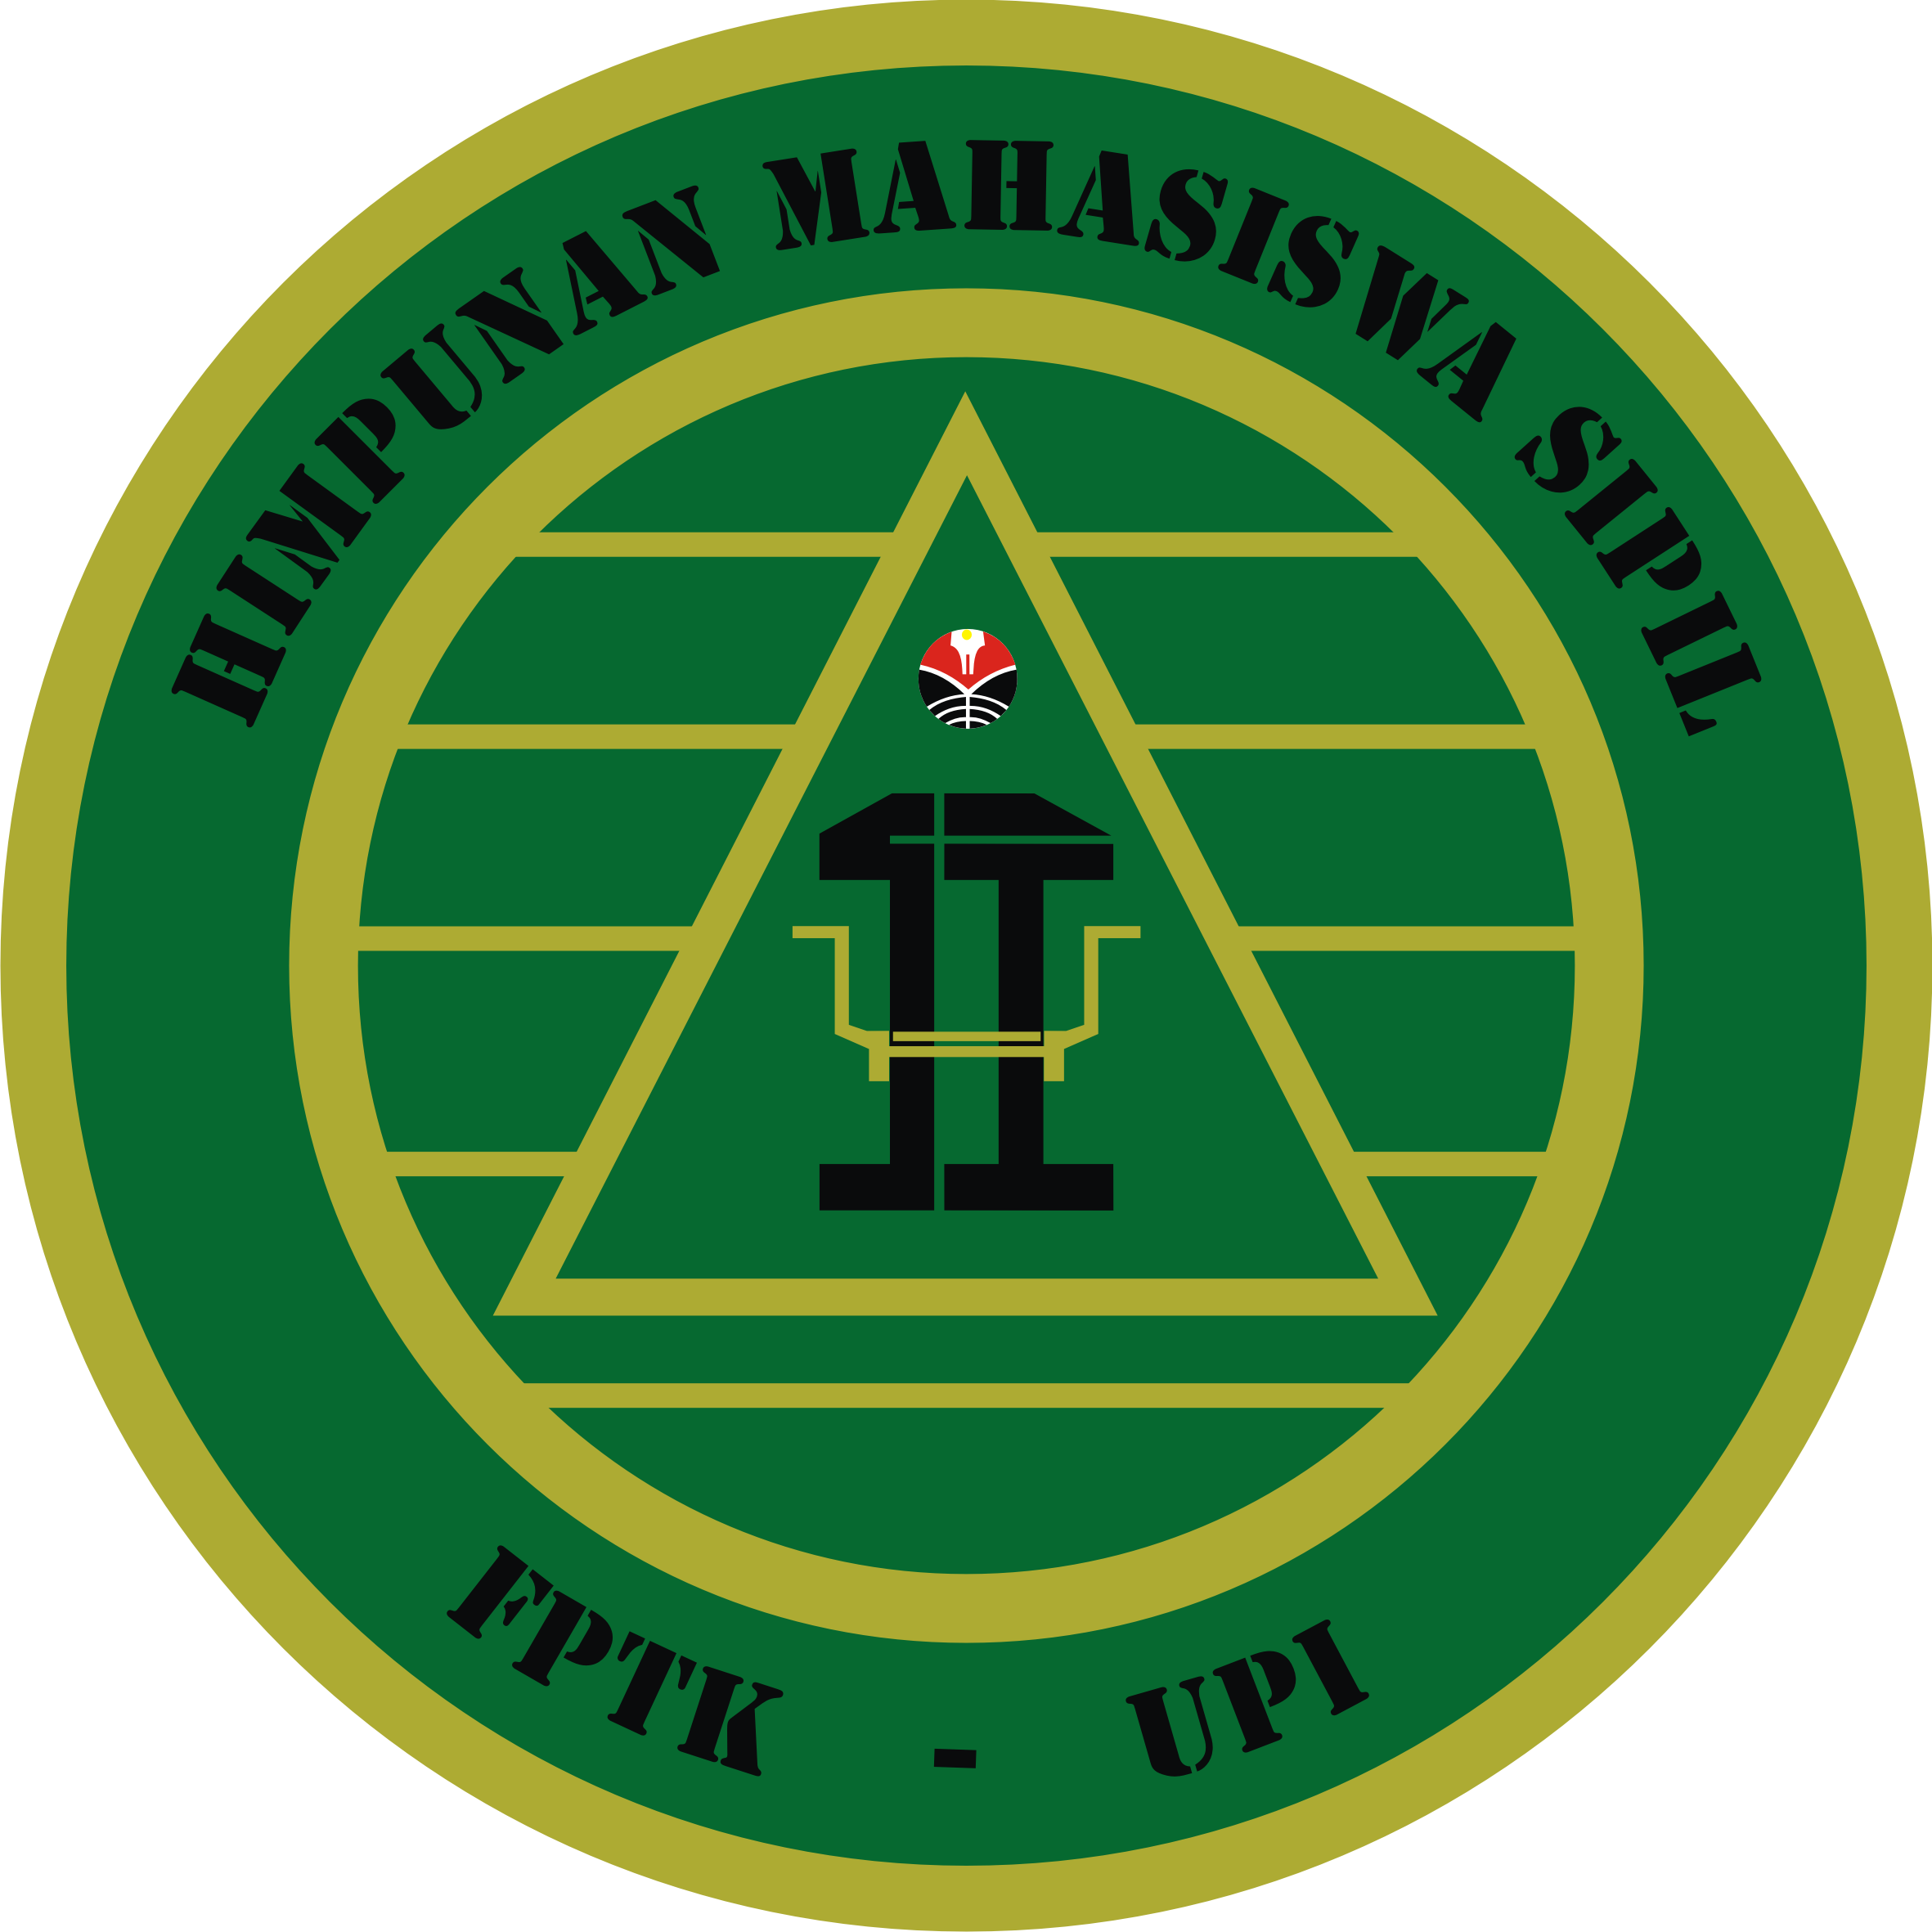 HMS FPTK UPI
✉ upi.hms@gmail.com
📷 instagram : hms_upi
▶ Youtube : Himpunan Mahasiswa Sipil UPI
Spotify   : HMS FPTK UPI